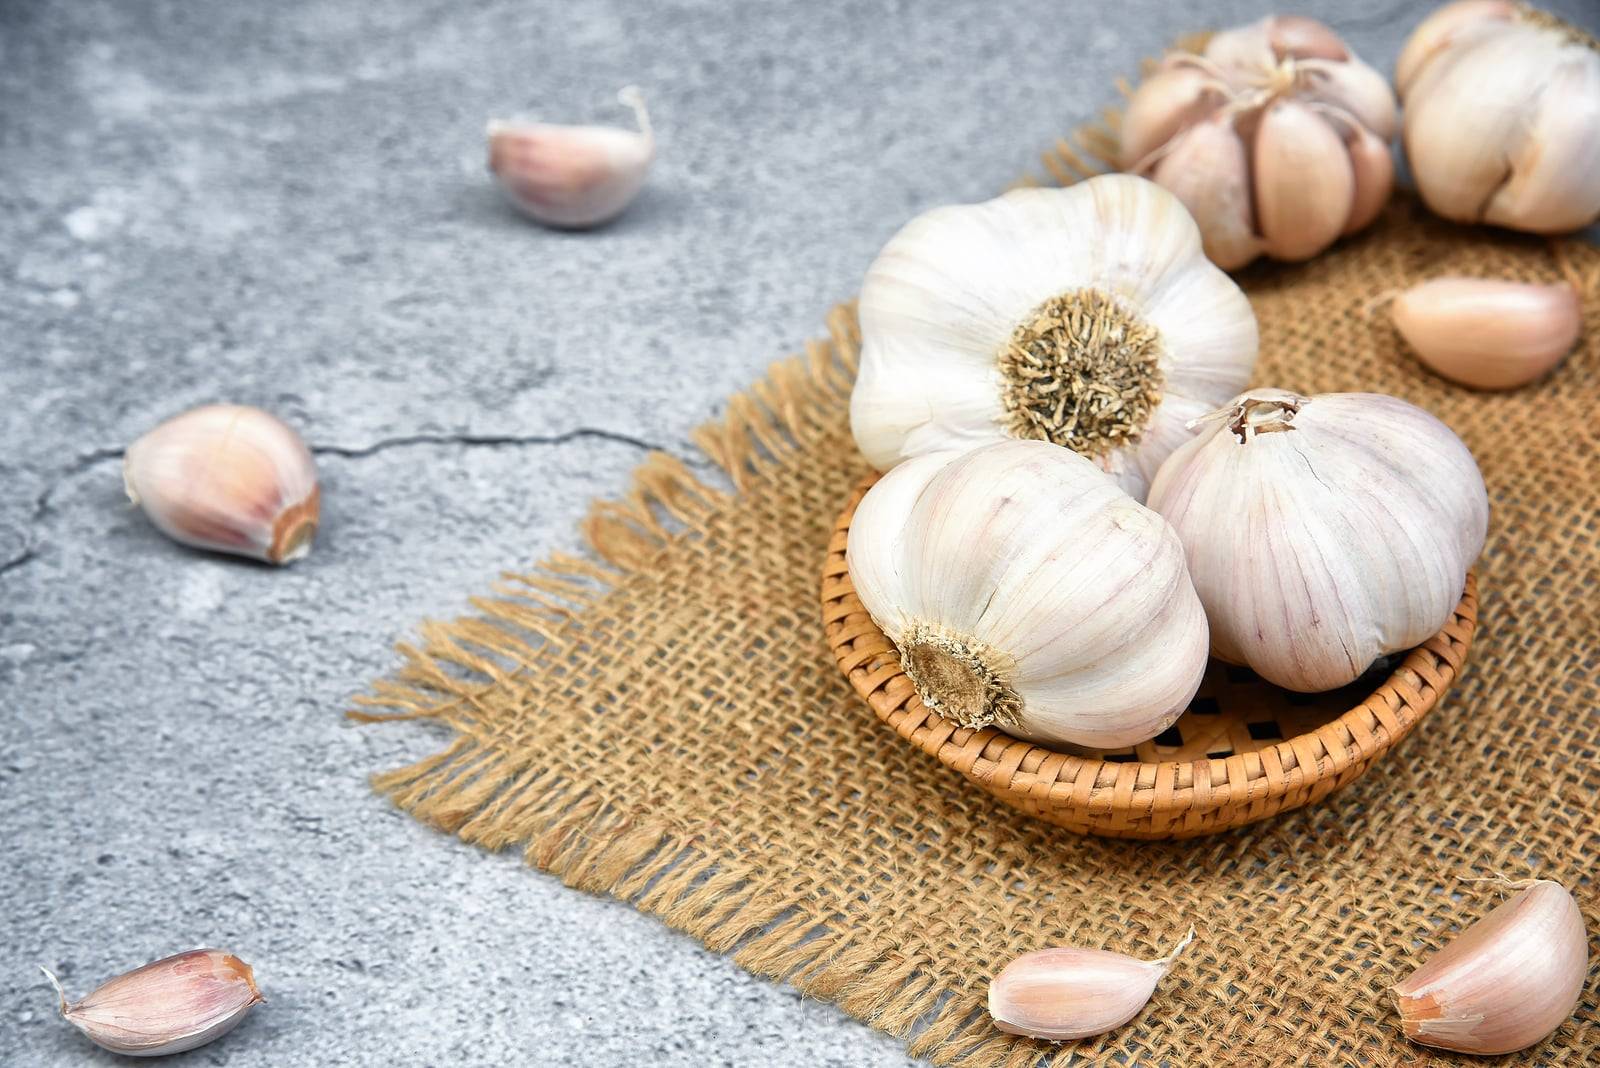 Food the Help Fight Cancer - Garlic